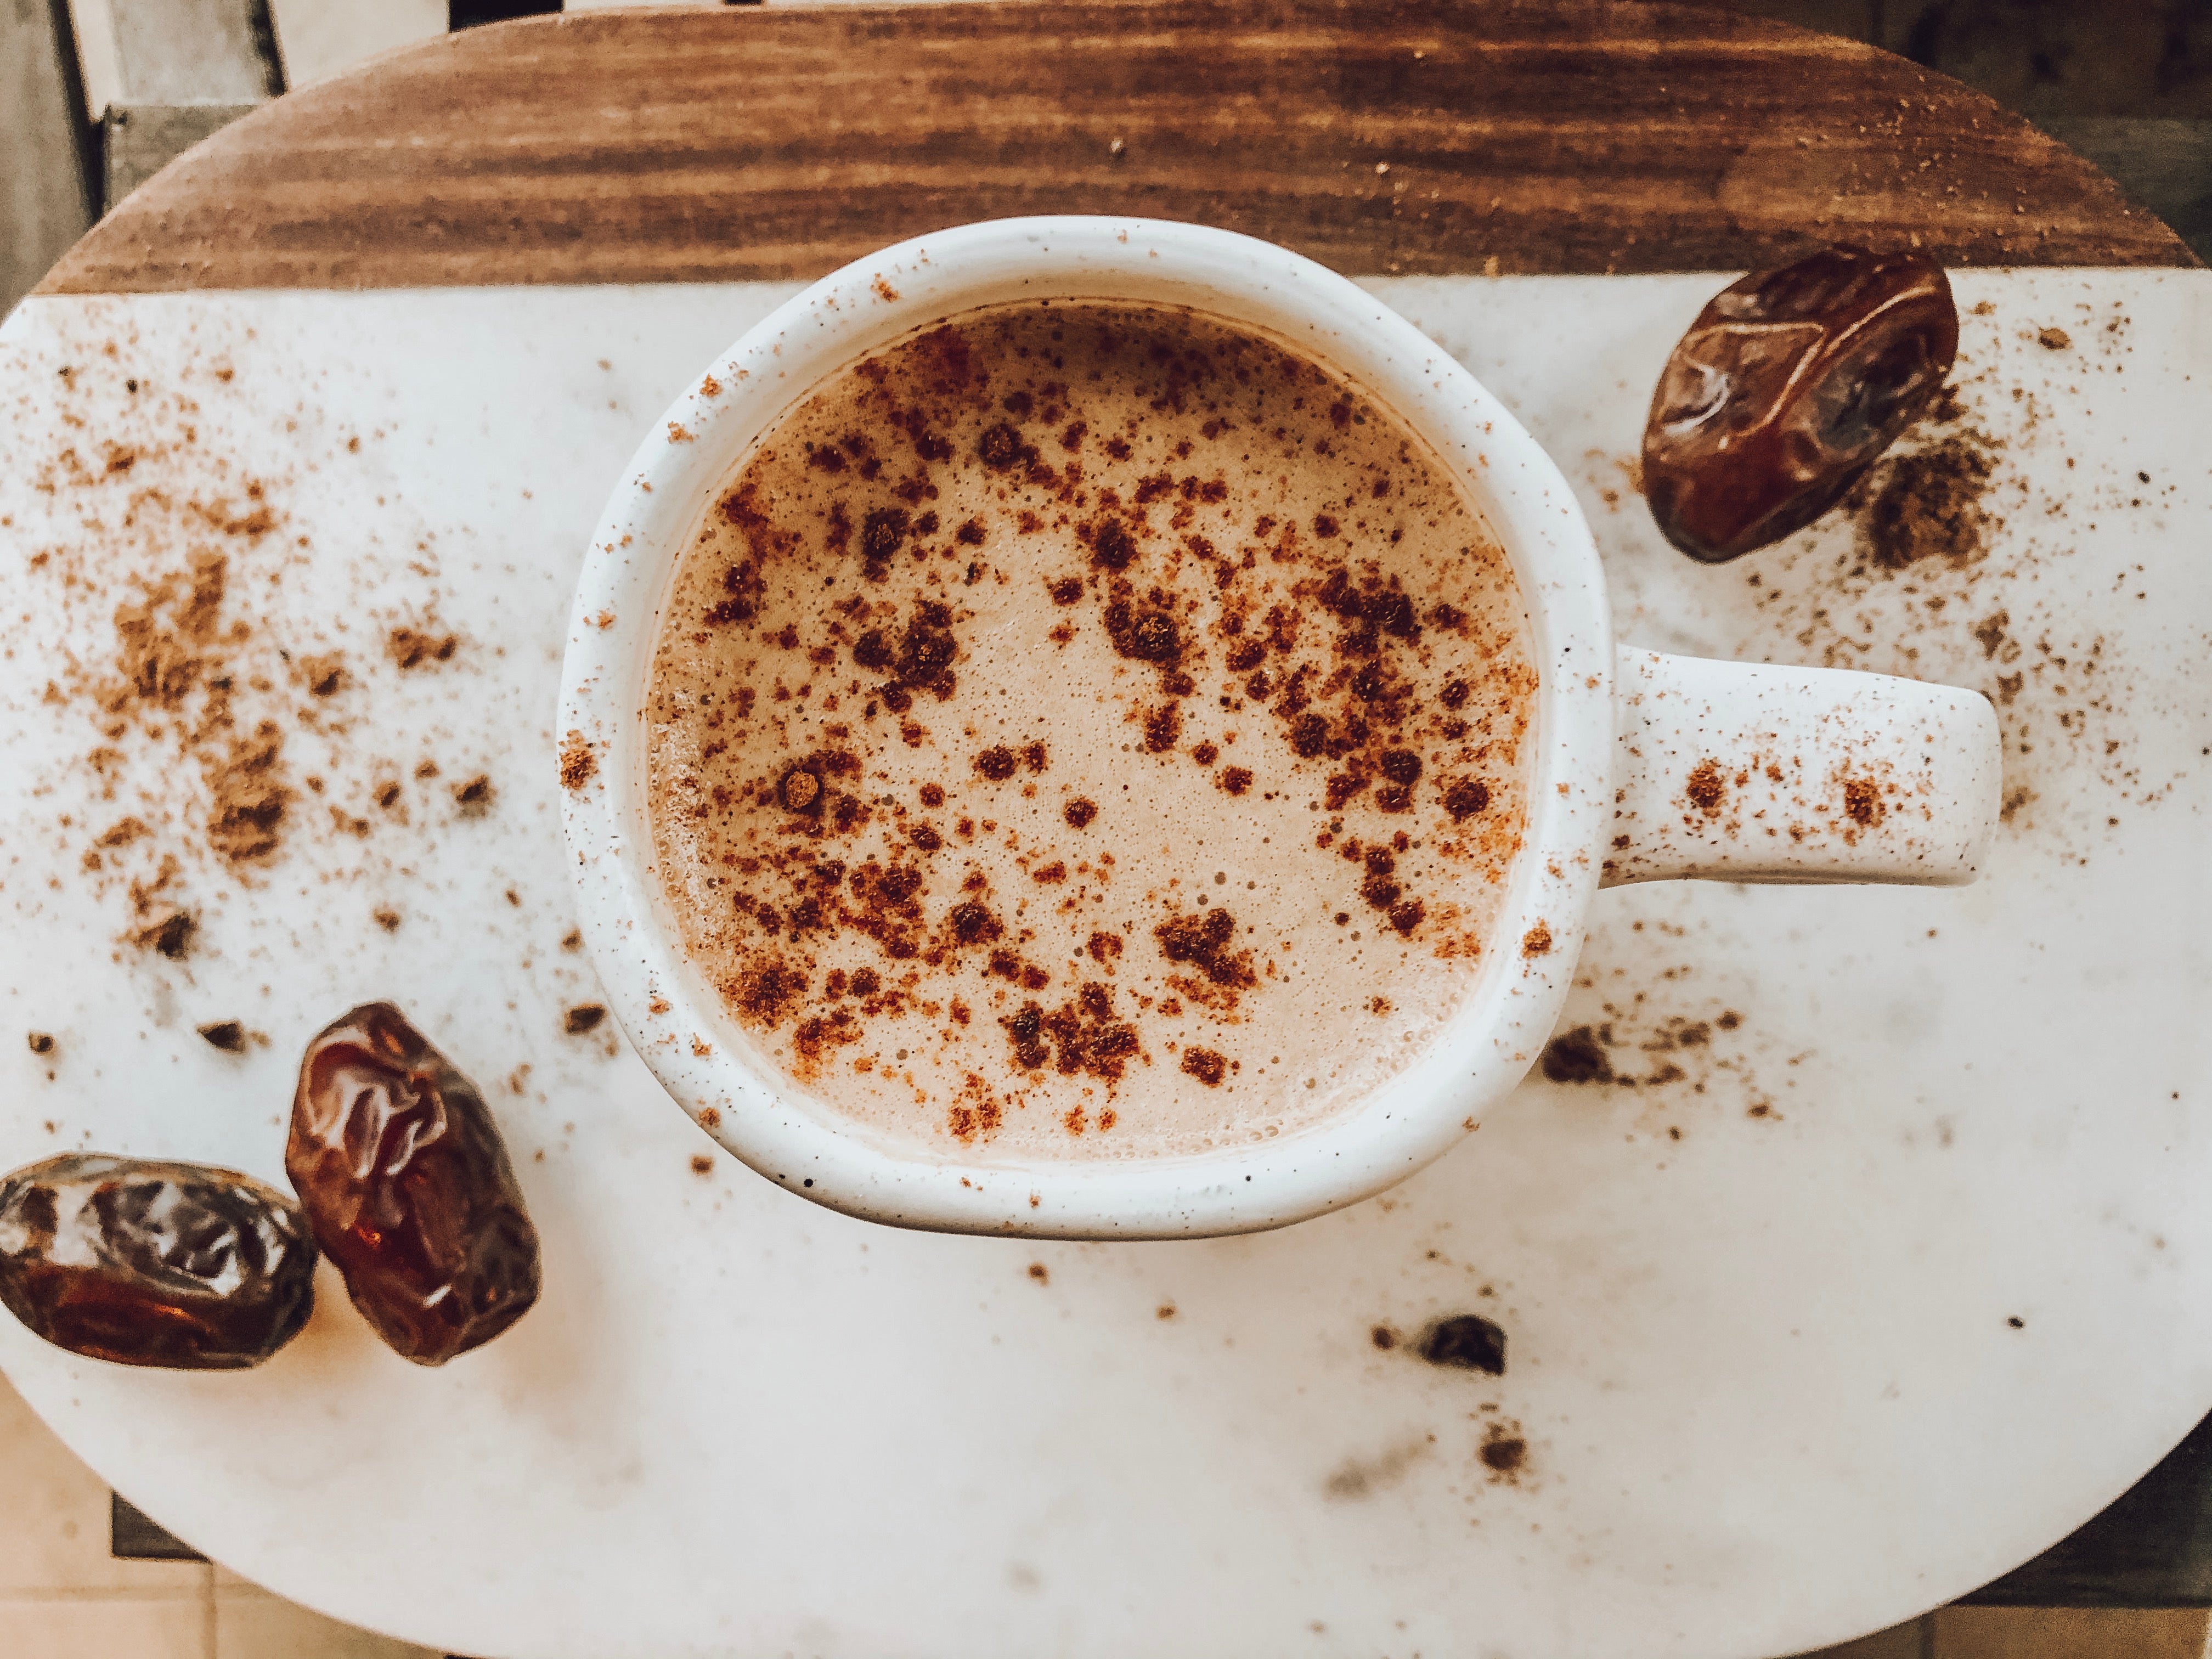 My Winter Morning Coffee Ritual: Preheat the Mug to Keep Coffee Hot